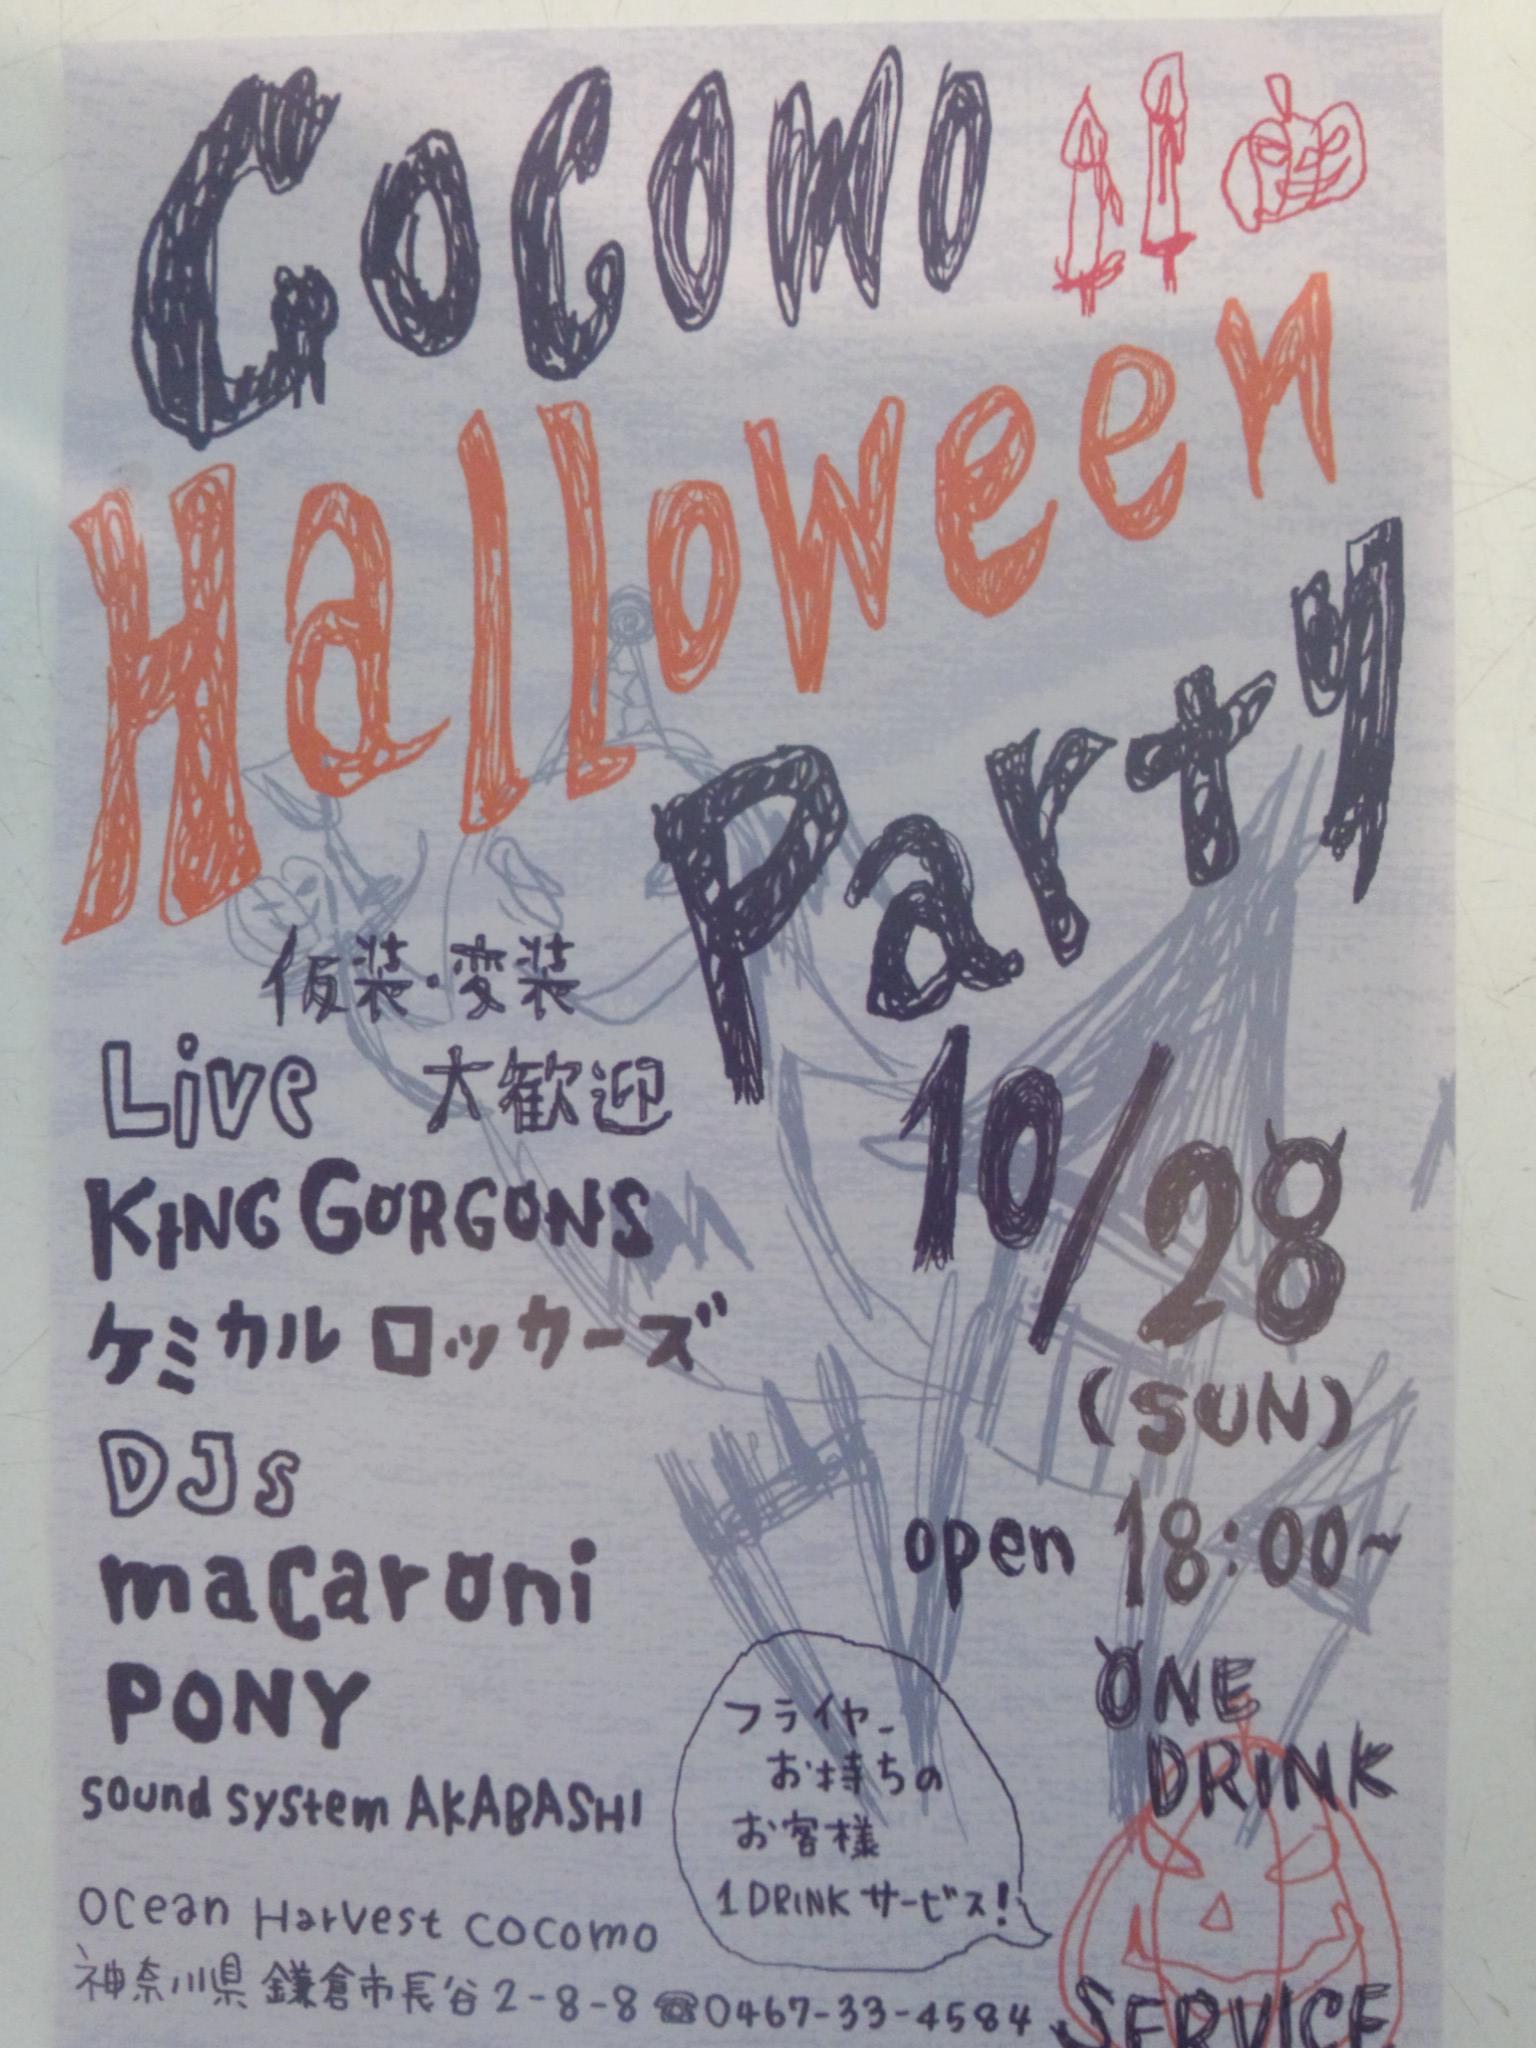 COCOMO Hallowen Party